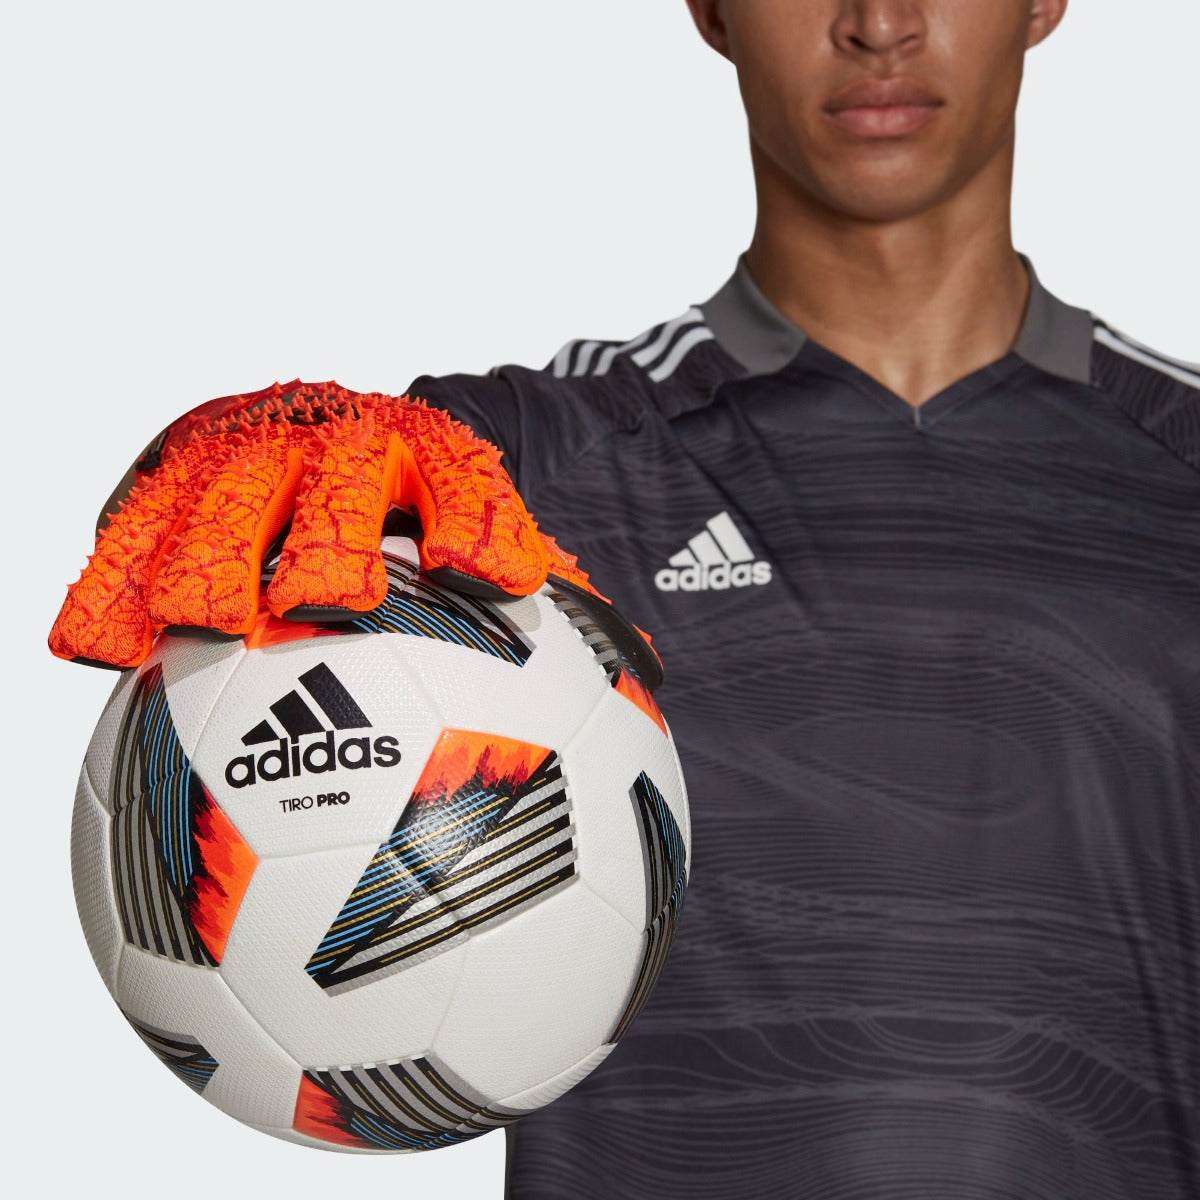 Adidas Predator Pro Fingersave Goalkeeper Gloves - Red-Black (Model 2)